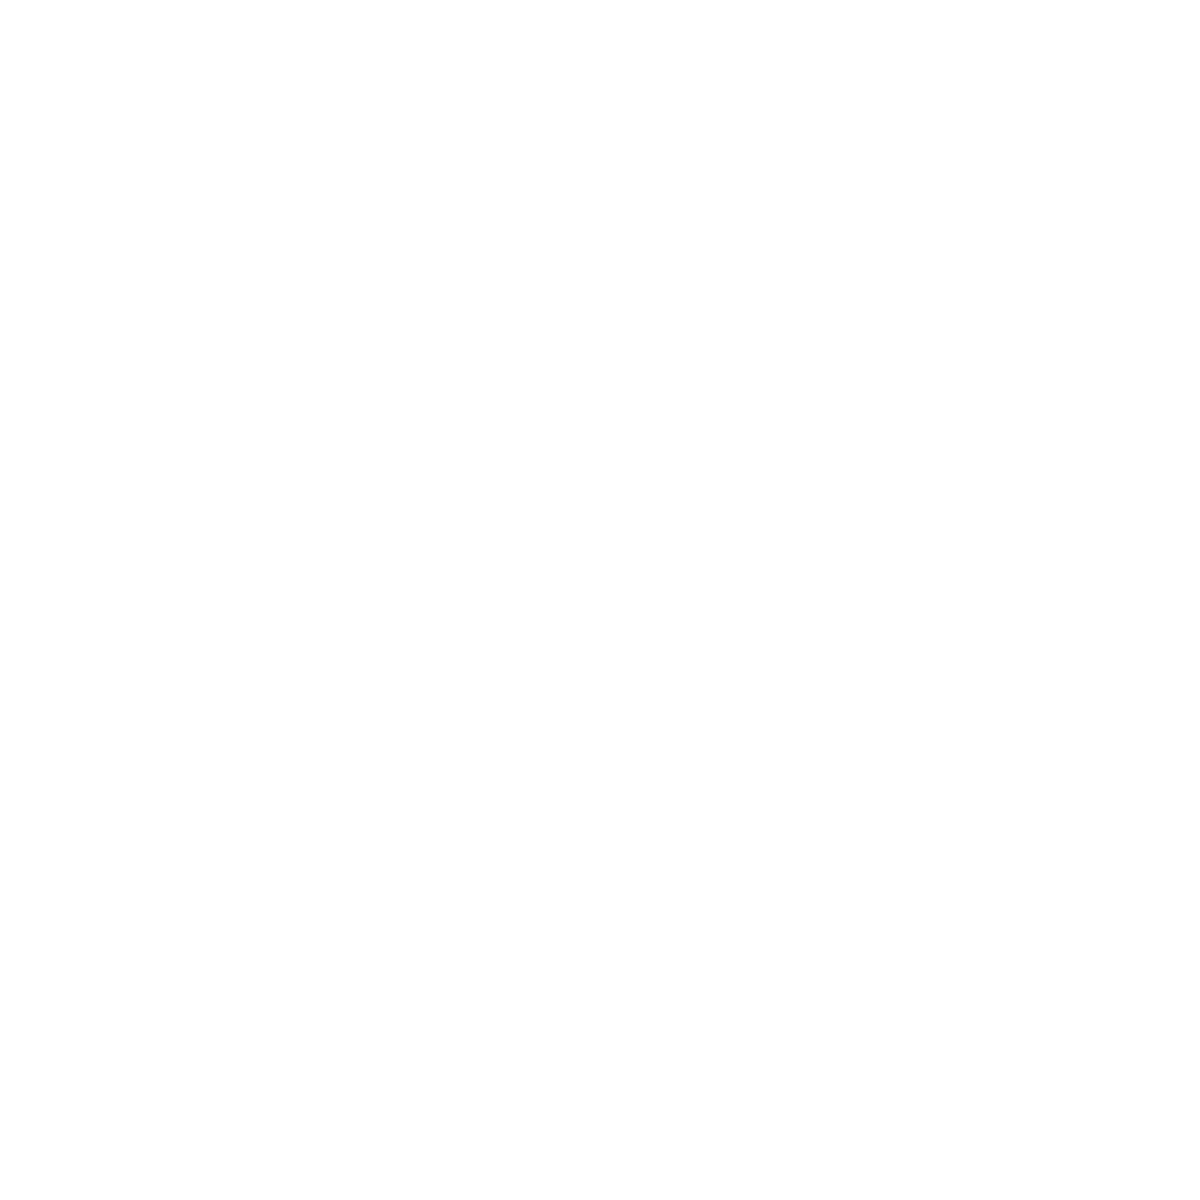 JC Photography